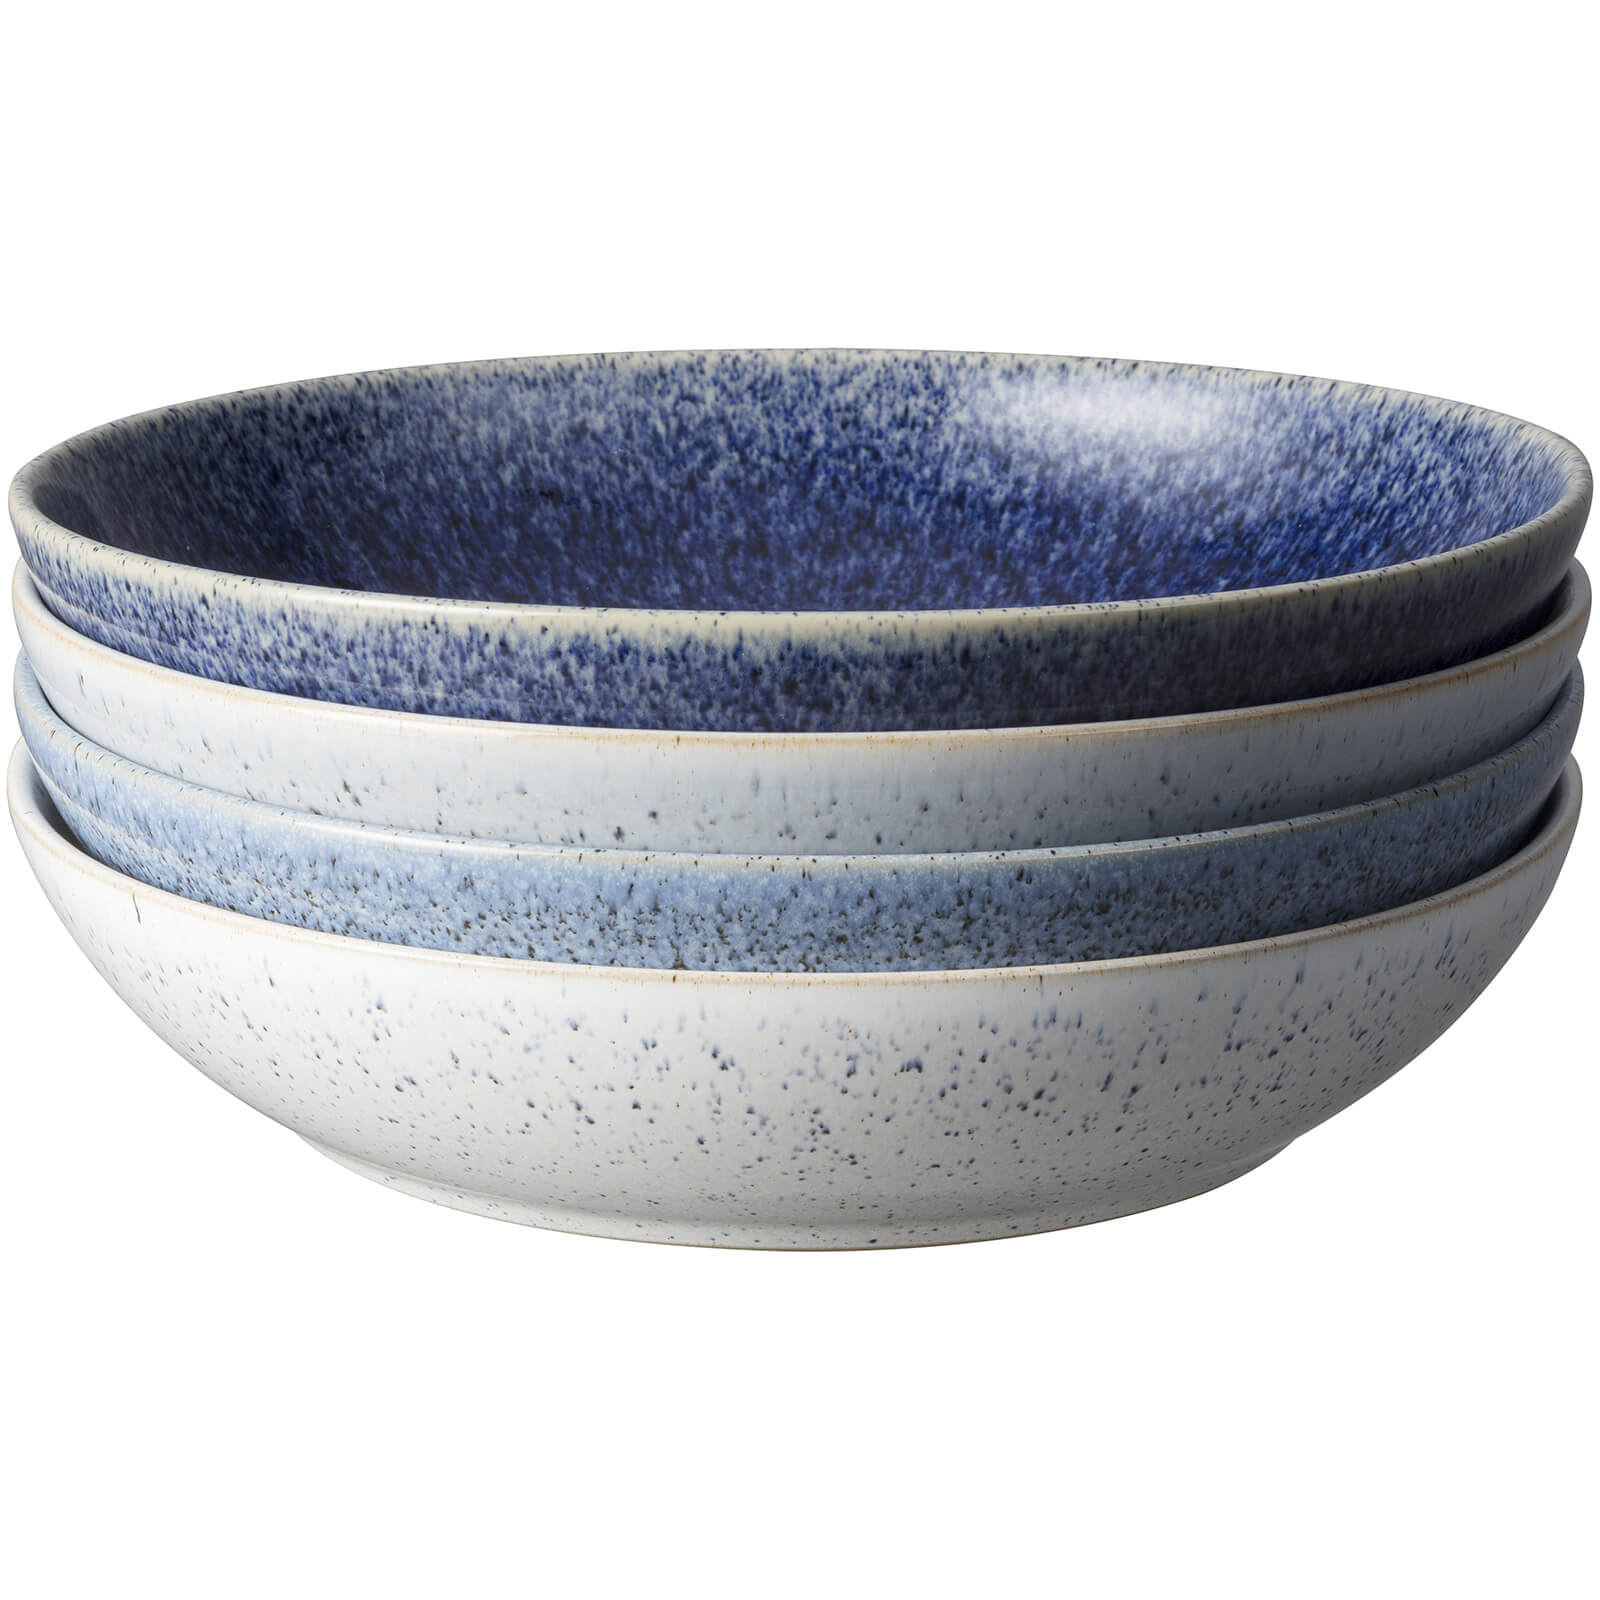 Photos - Other tableware Denby Studio Blue Pasta Bowl - Set of 4 411042044 